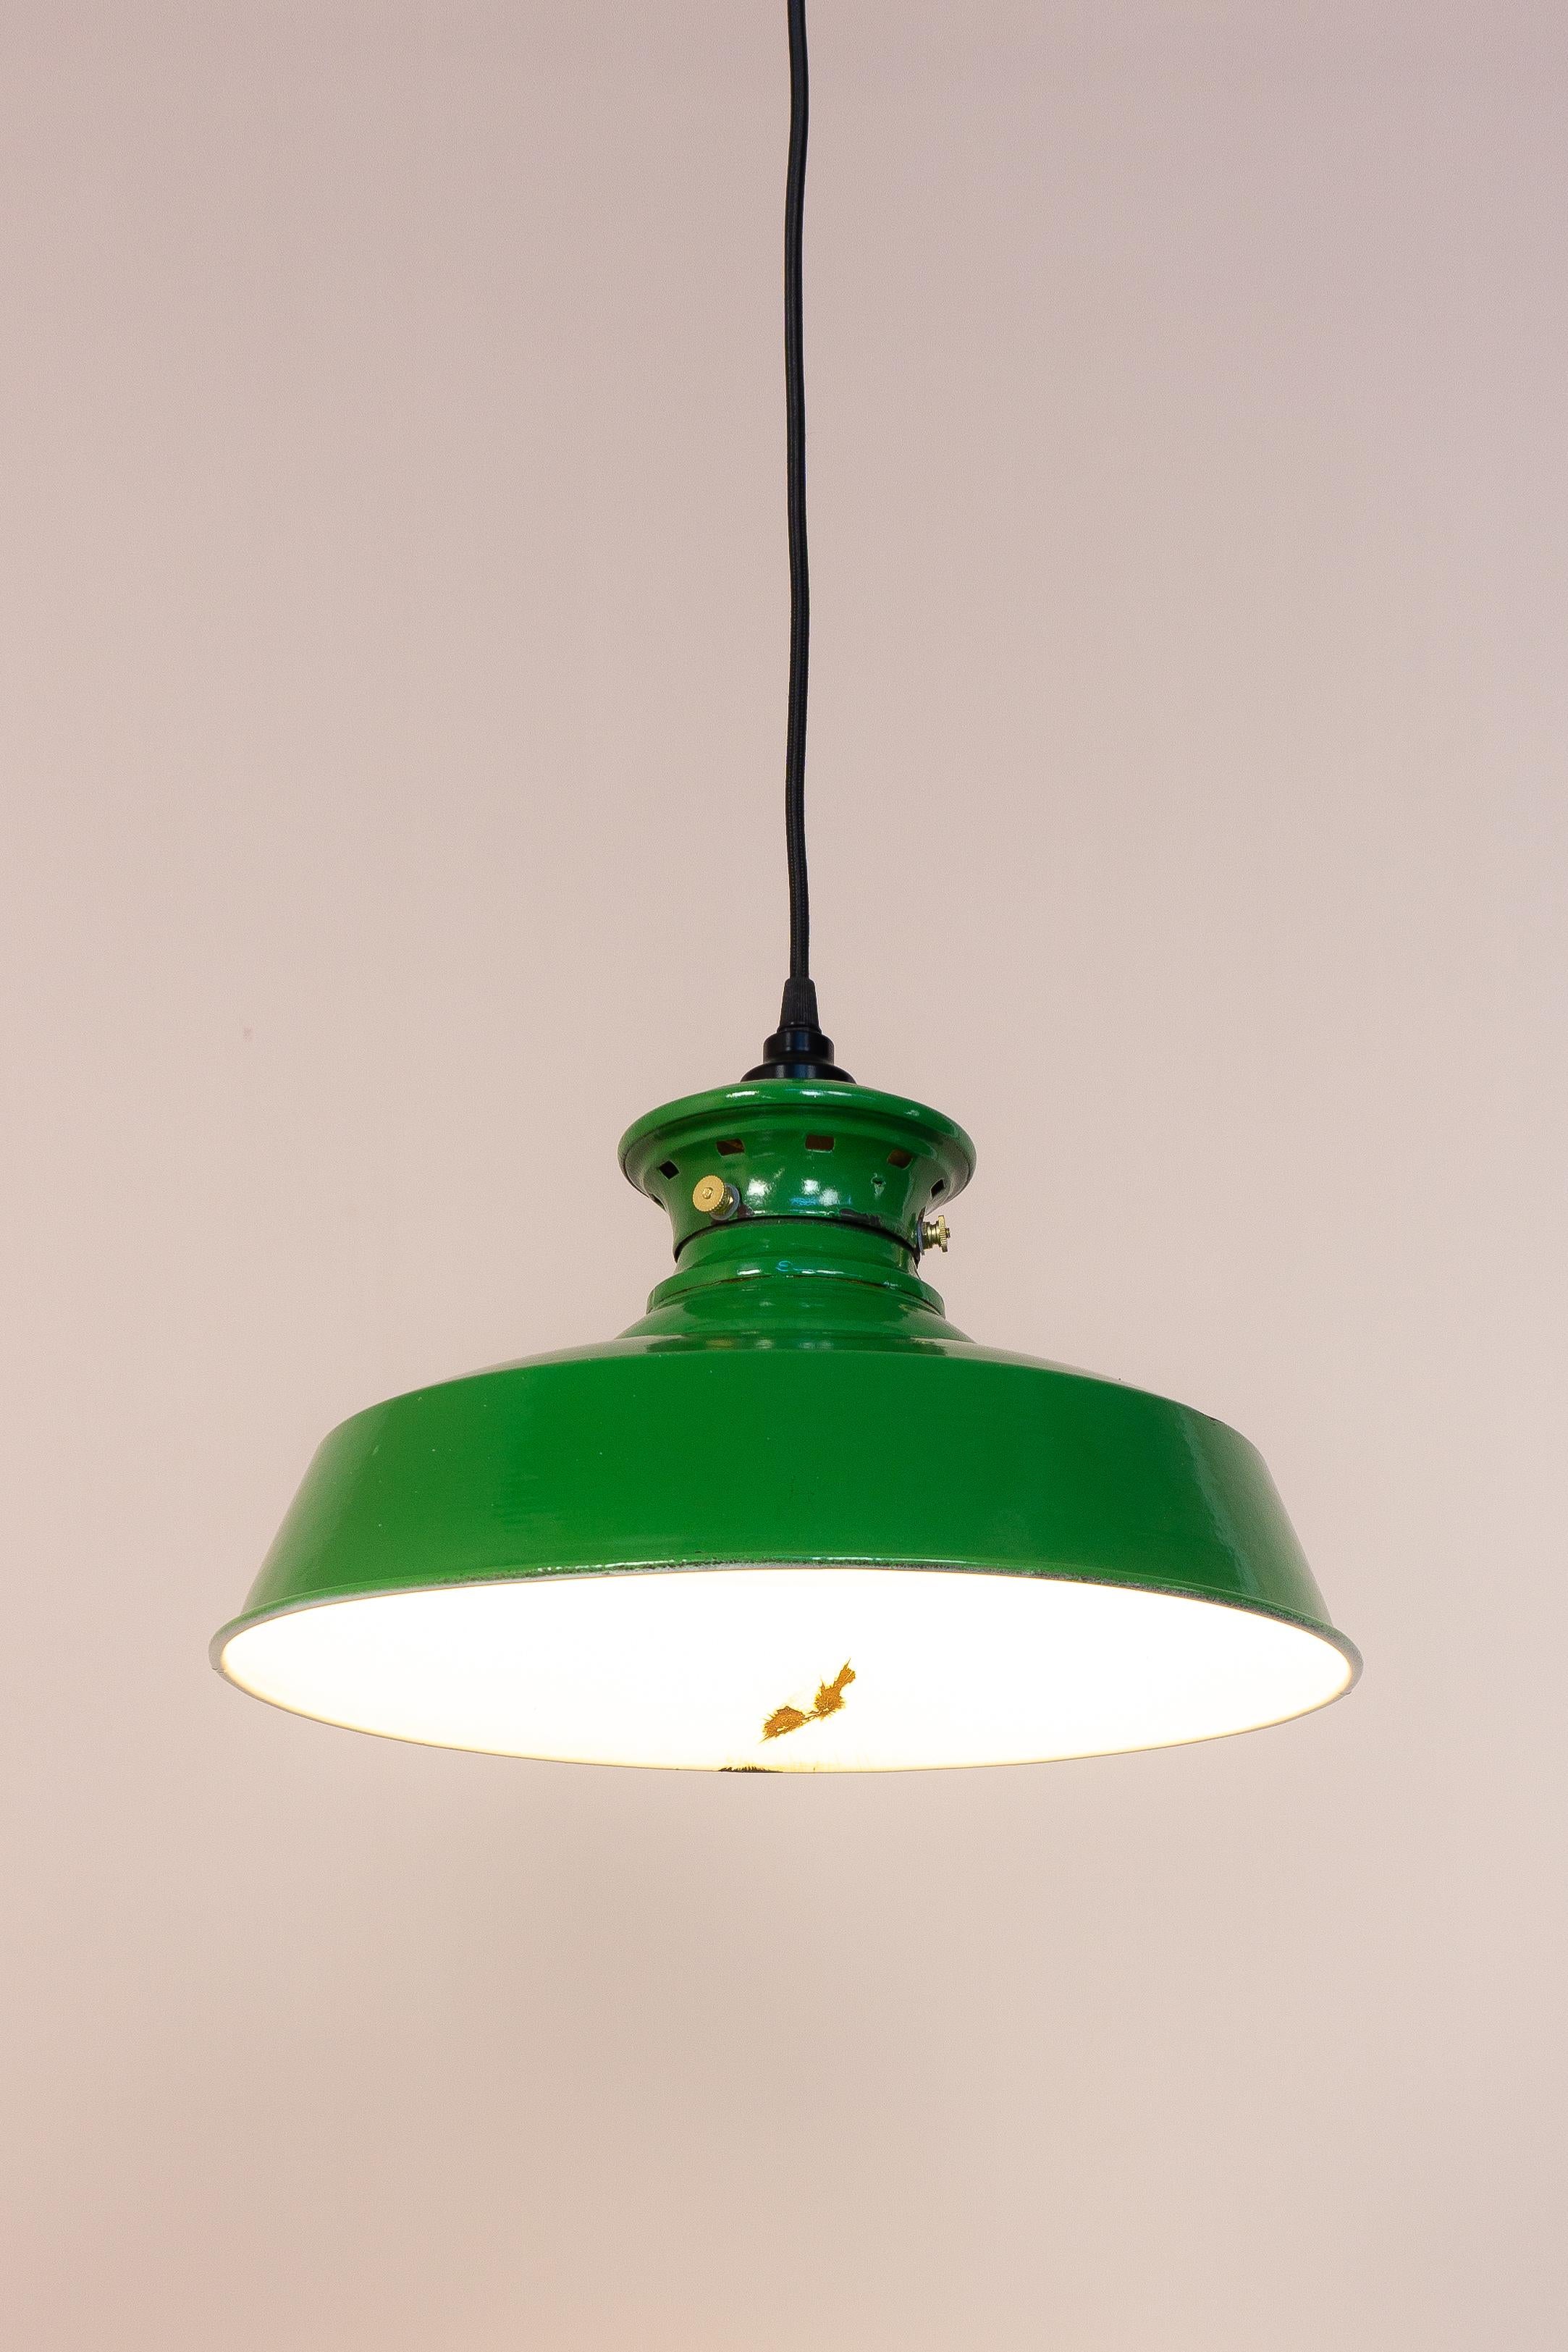 Enameled French Green Enamel Vintage Industrial Pendant Light For Sale